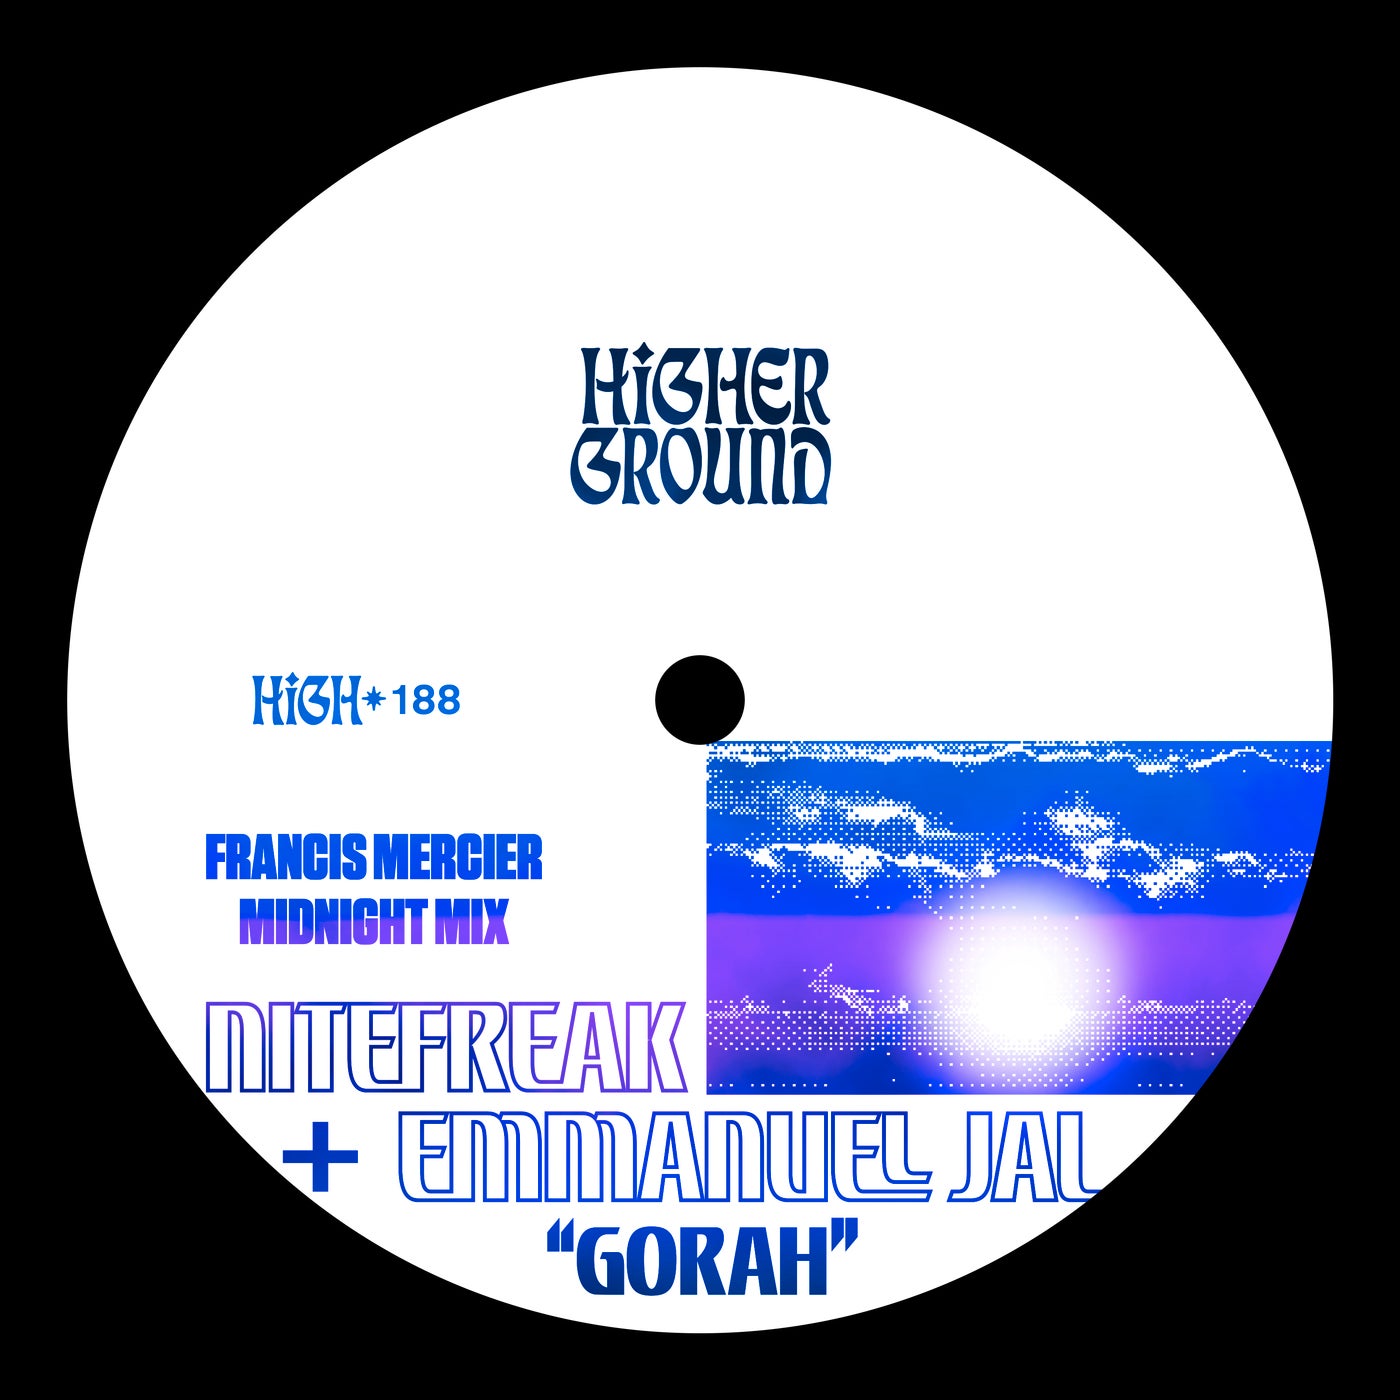 Emmanuel Jal - Gorah (Francis Mercier Midnight Mix (Extended)) on Higher Ground